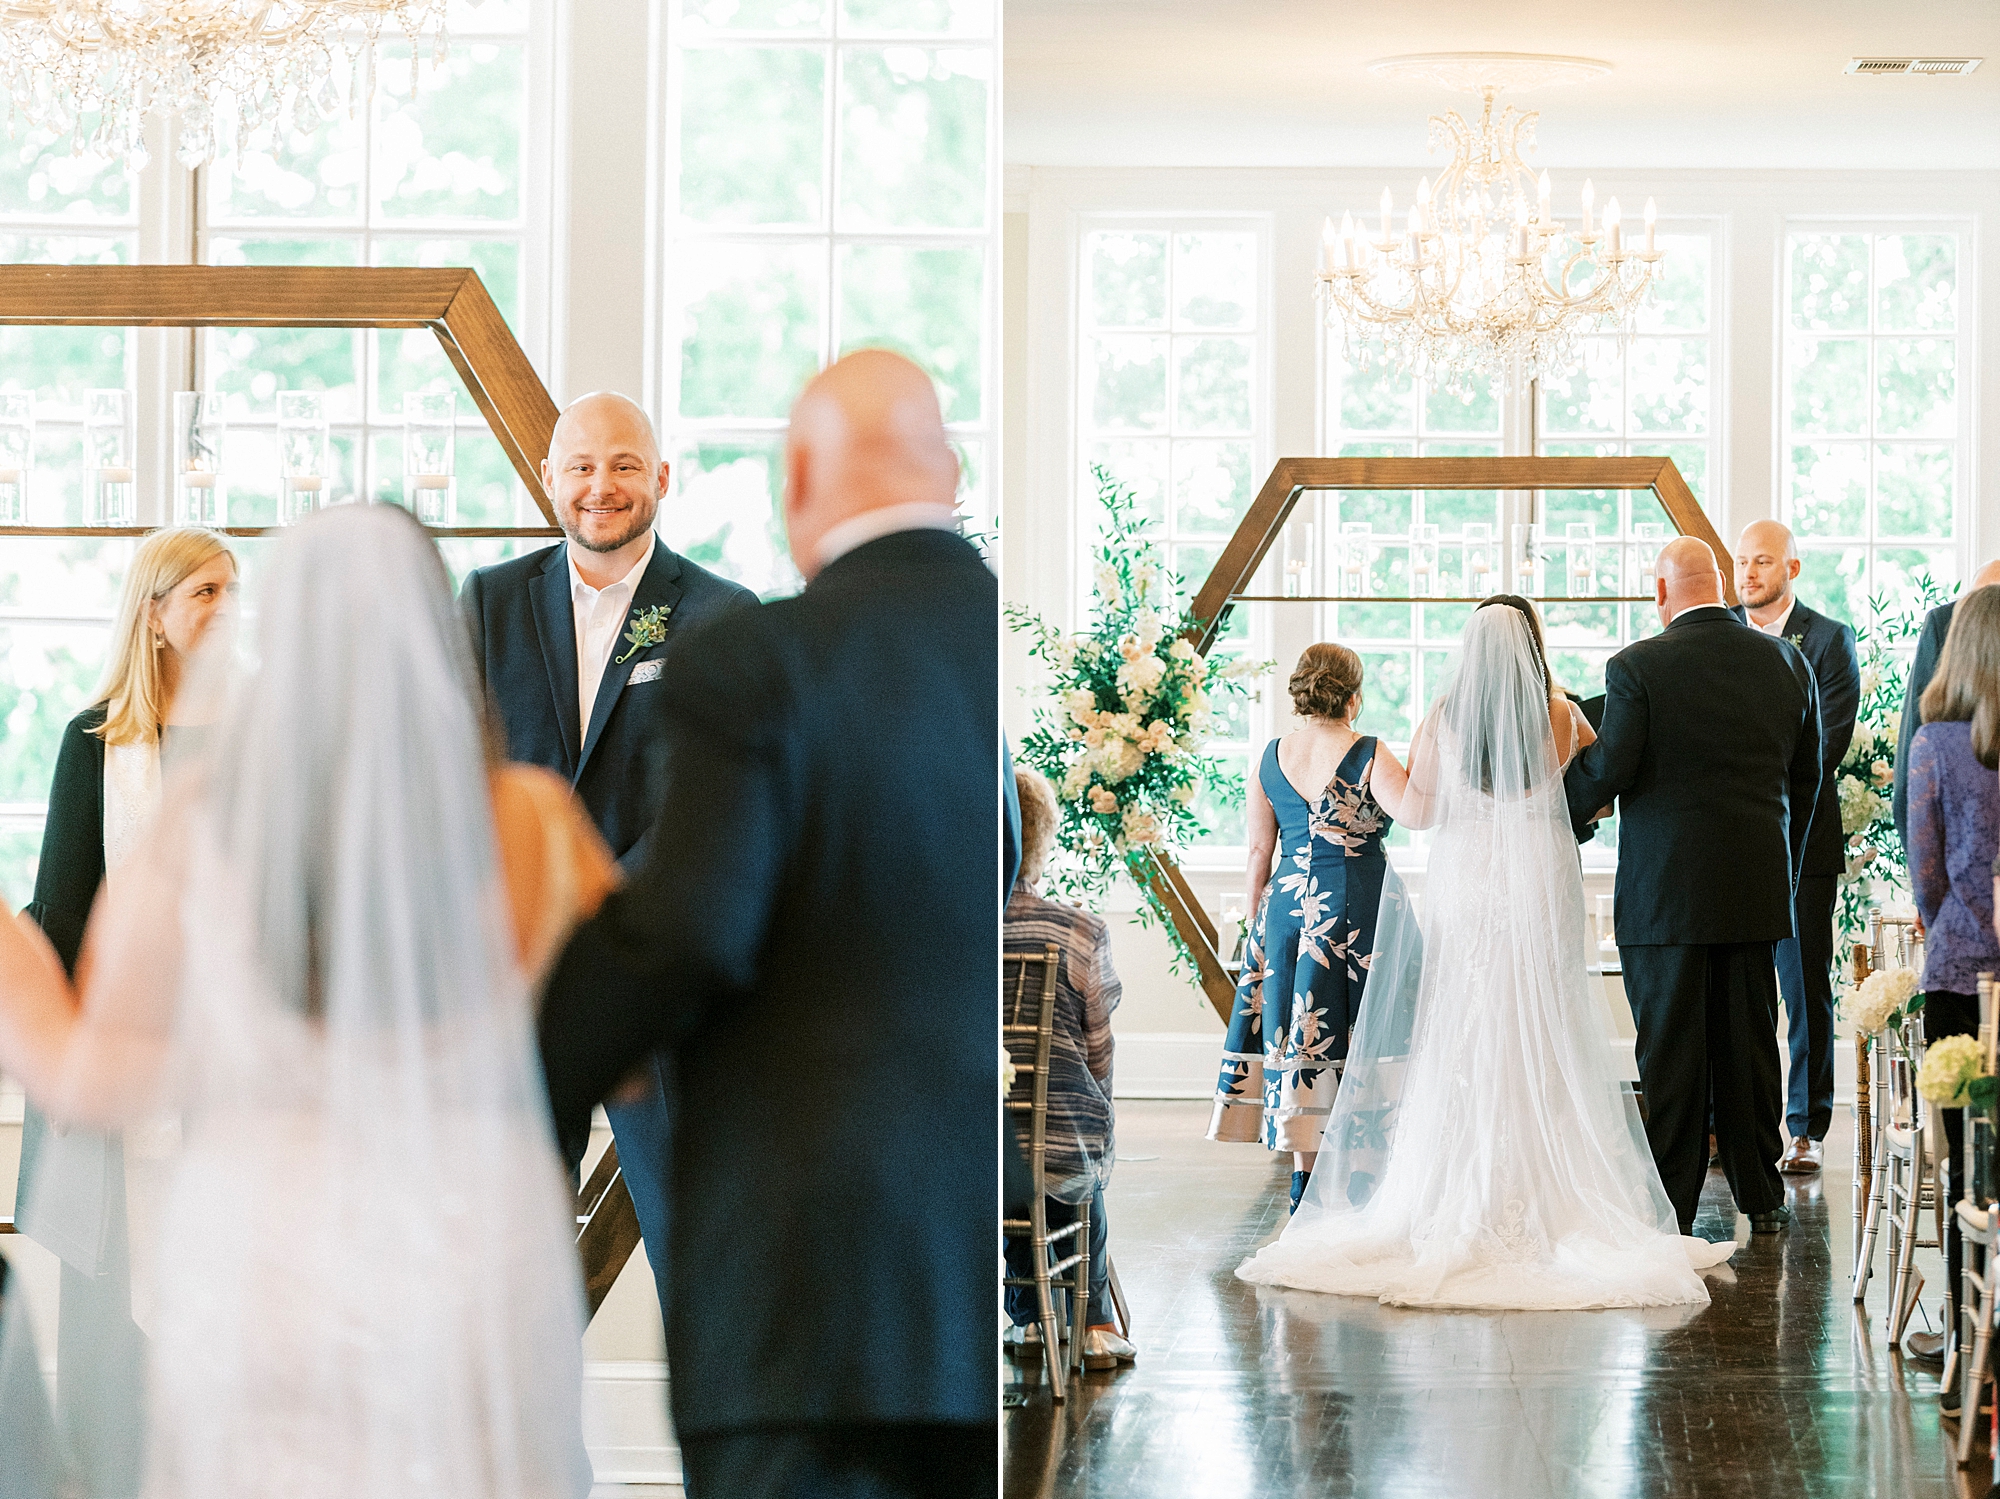 parents walk daughter up aisle during indoor wedding ceremony at Separk Mansion